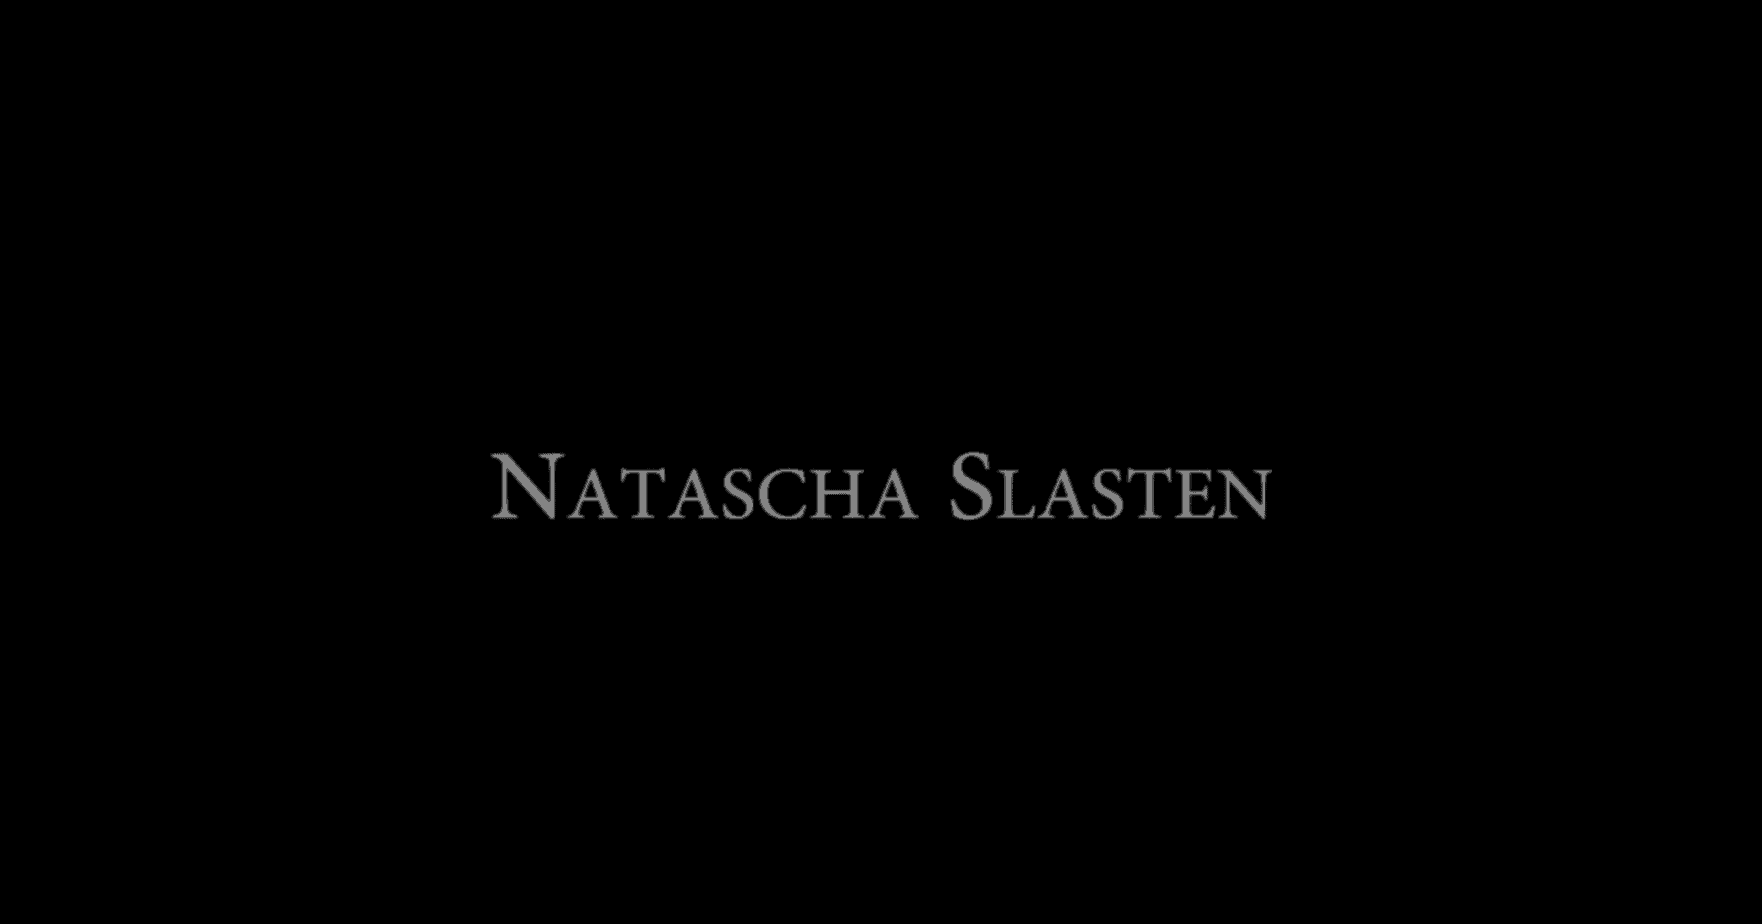 The words Natascha Slasten on a black background